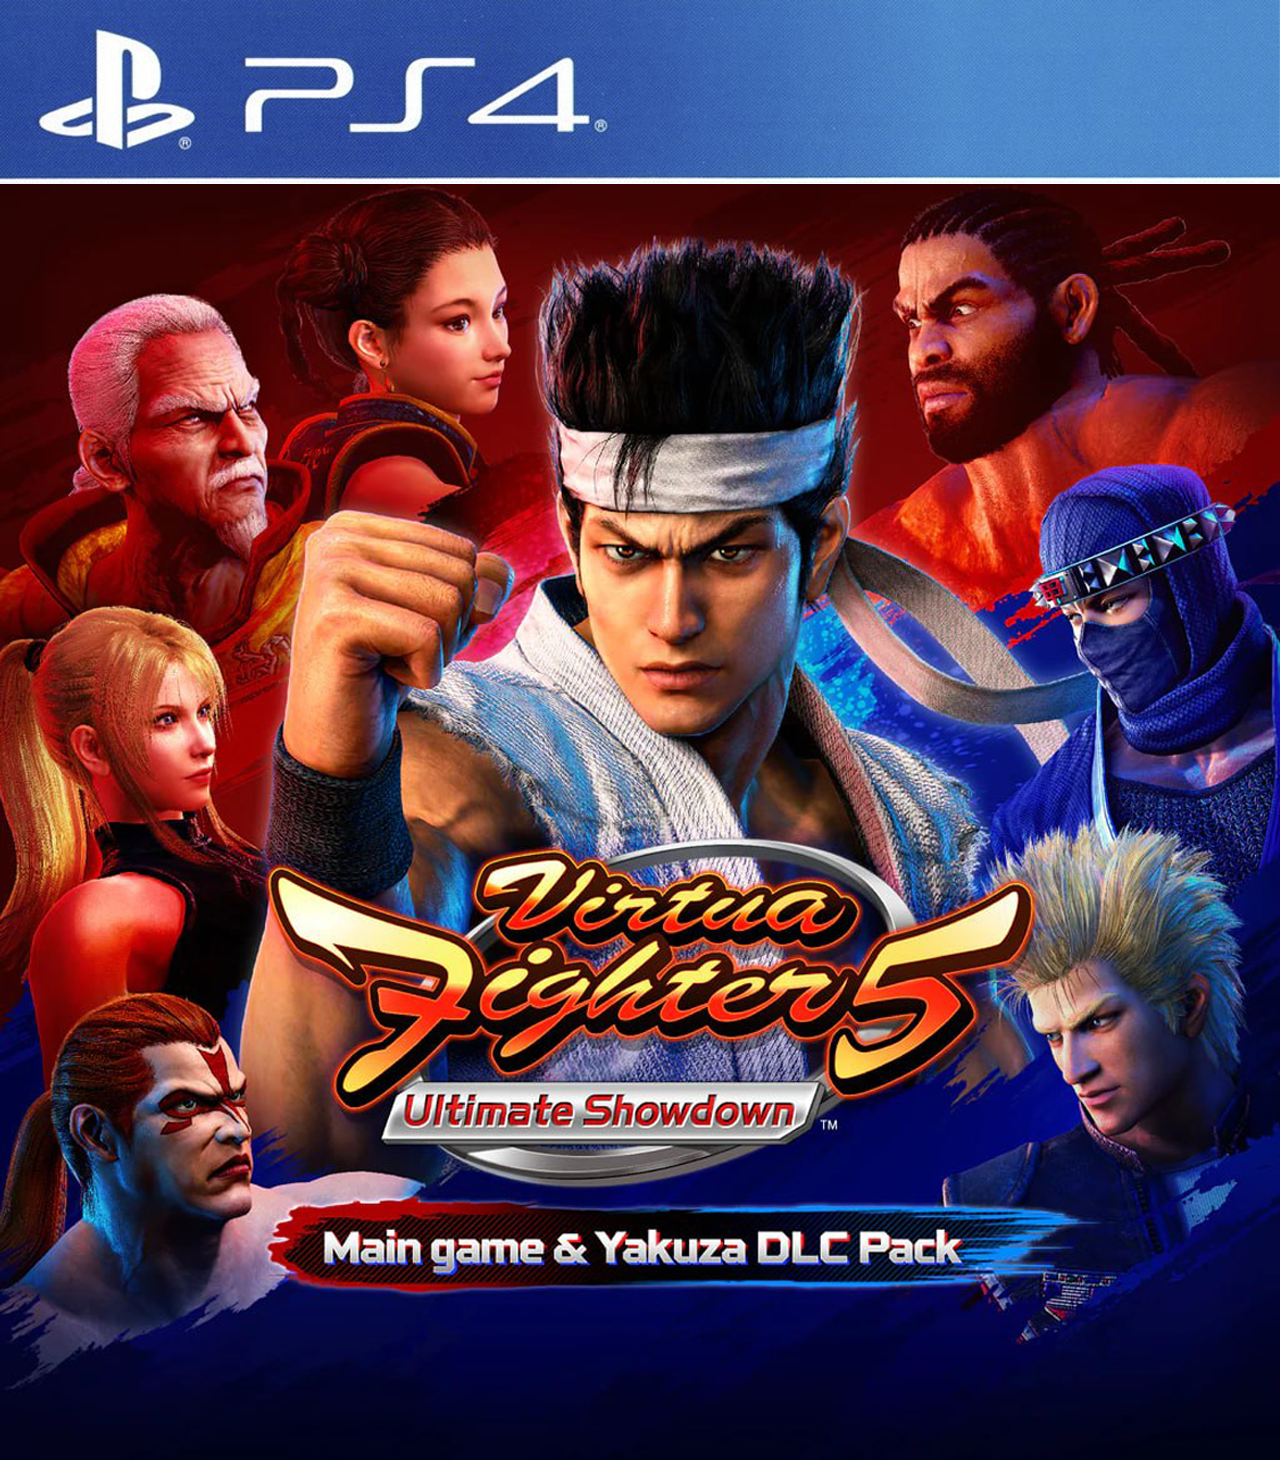 صورة للعبة Virtua Fighter 5 Ultimate Showdown + Yakuza Pack